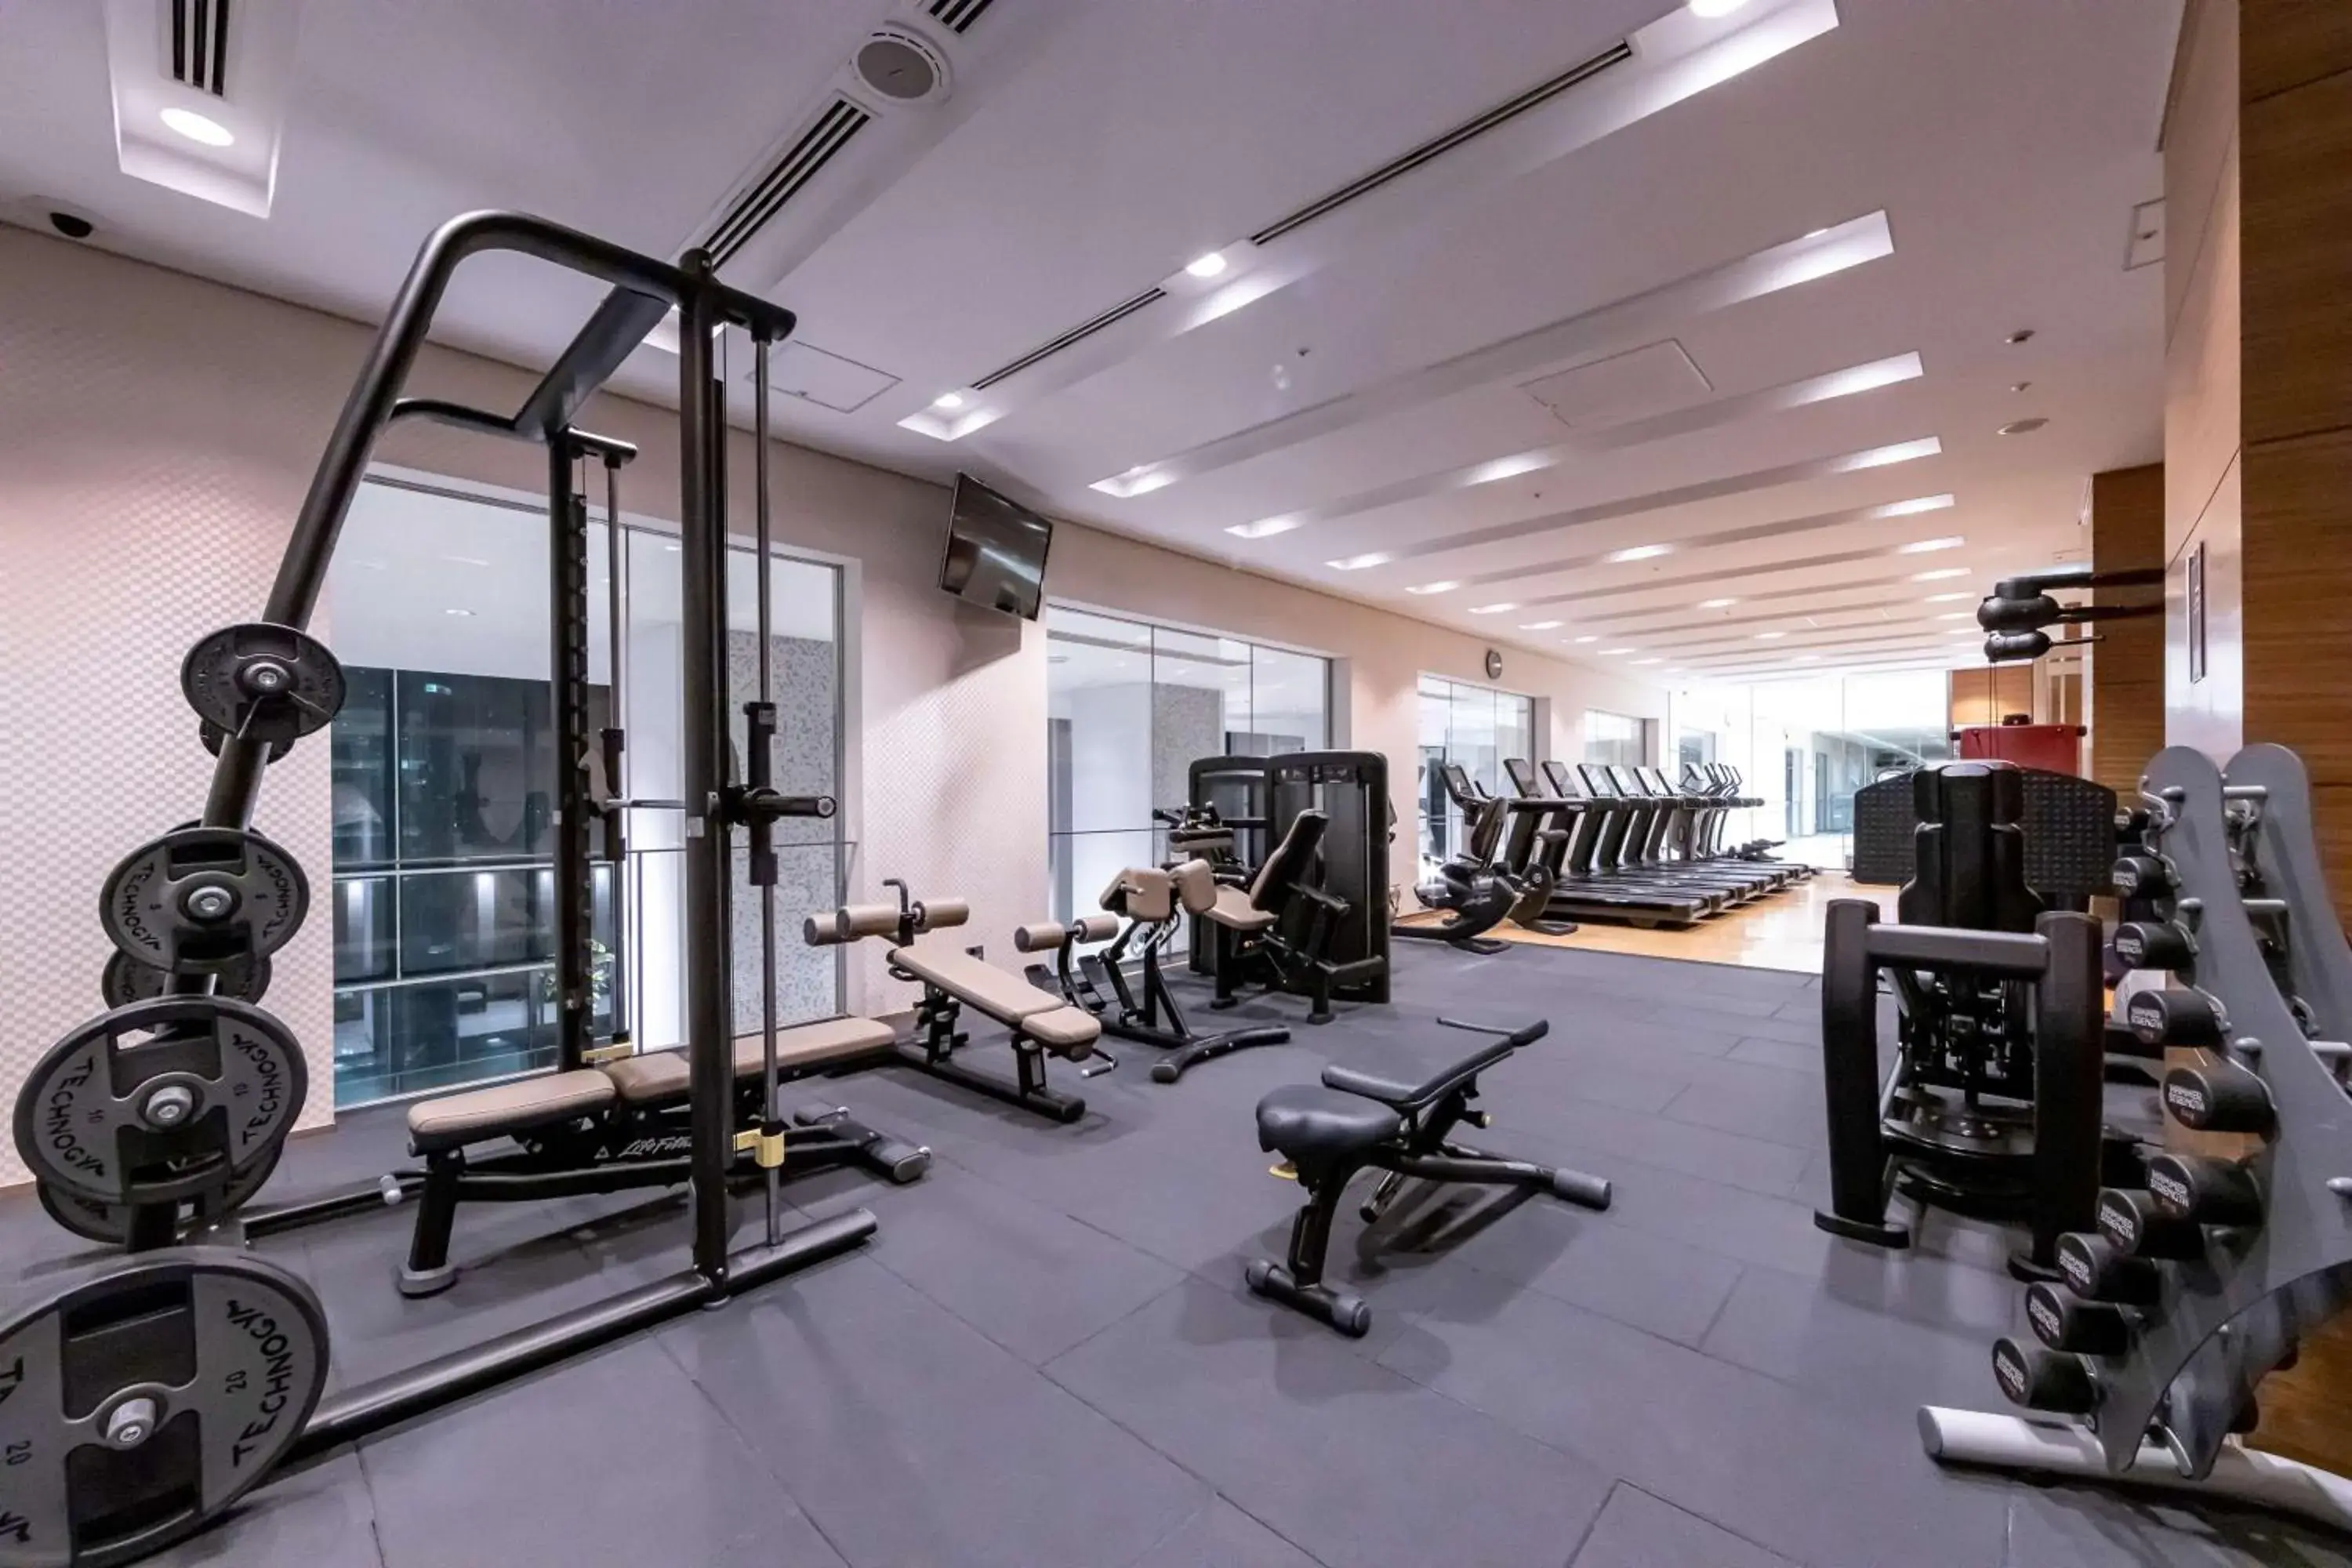 Fitness centre/facilities, Fitness Center/Facilities in Conrad Tokyo